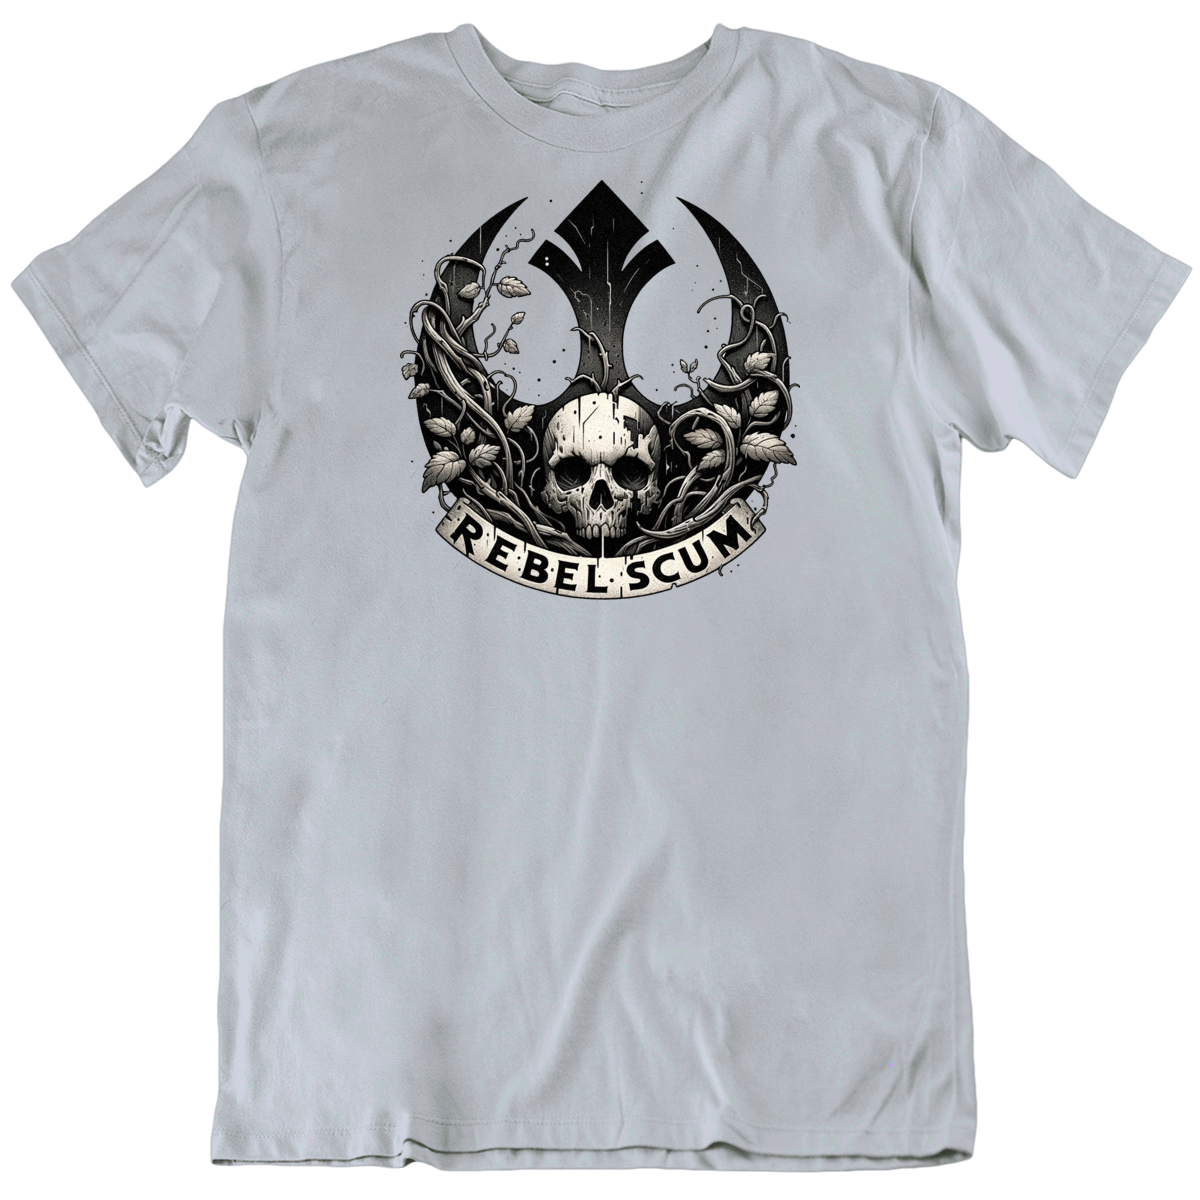 Rebel Scum Skull Star Wars Rebellion Alliance Parody T Shirt